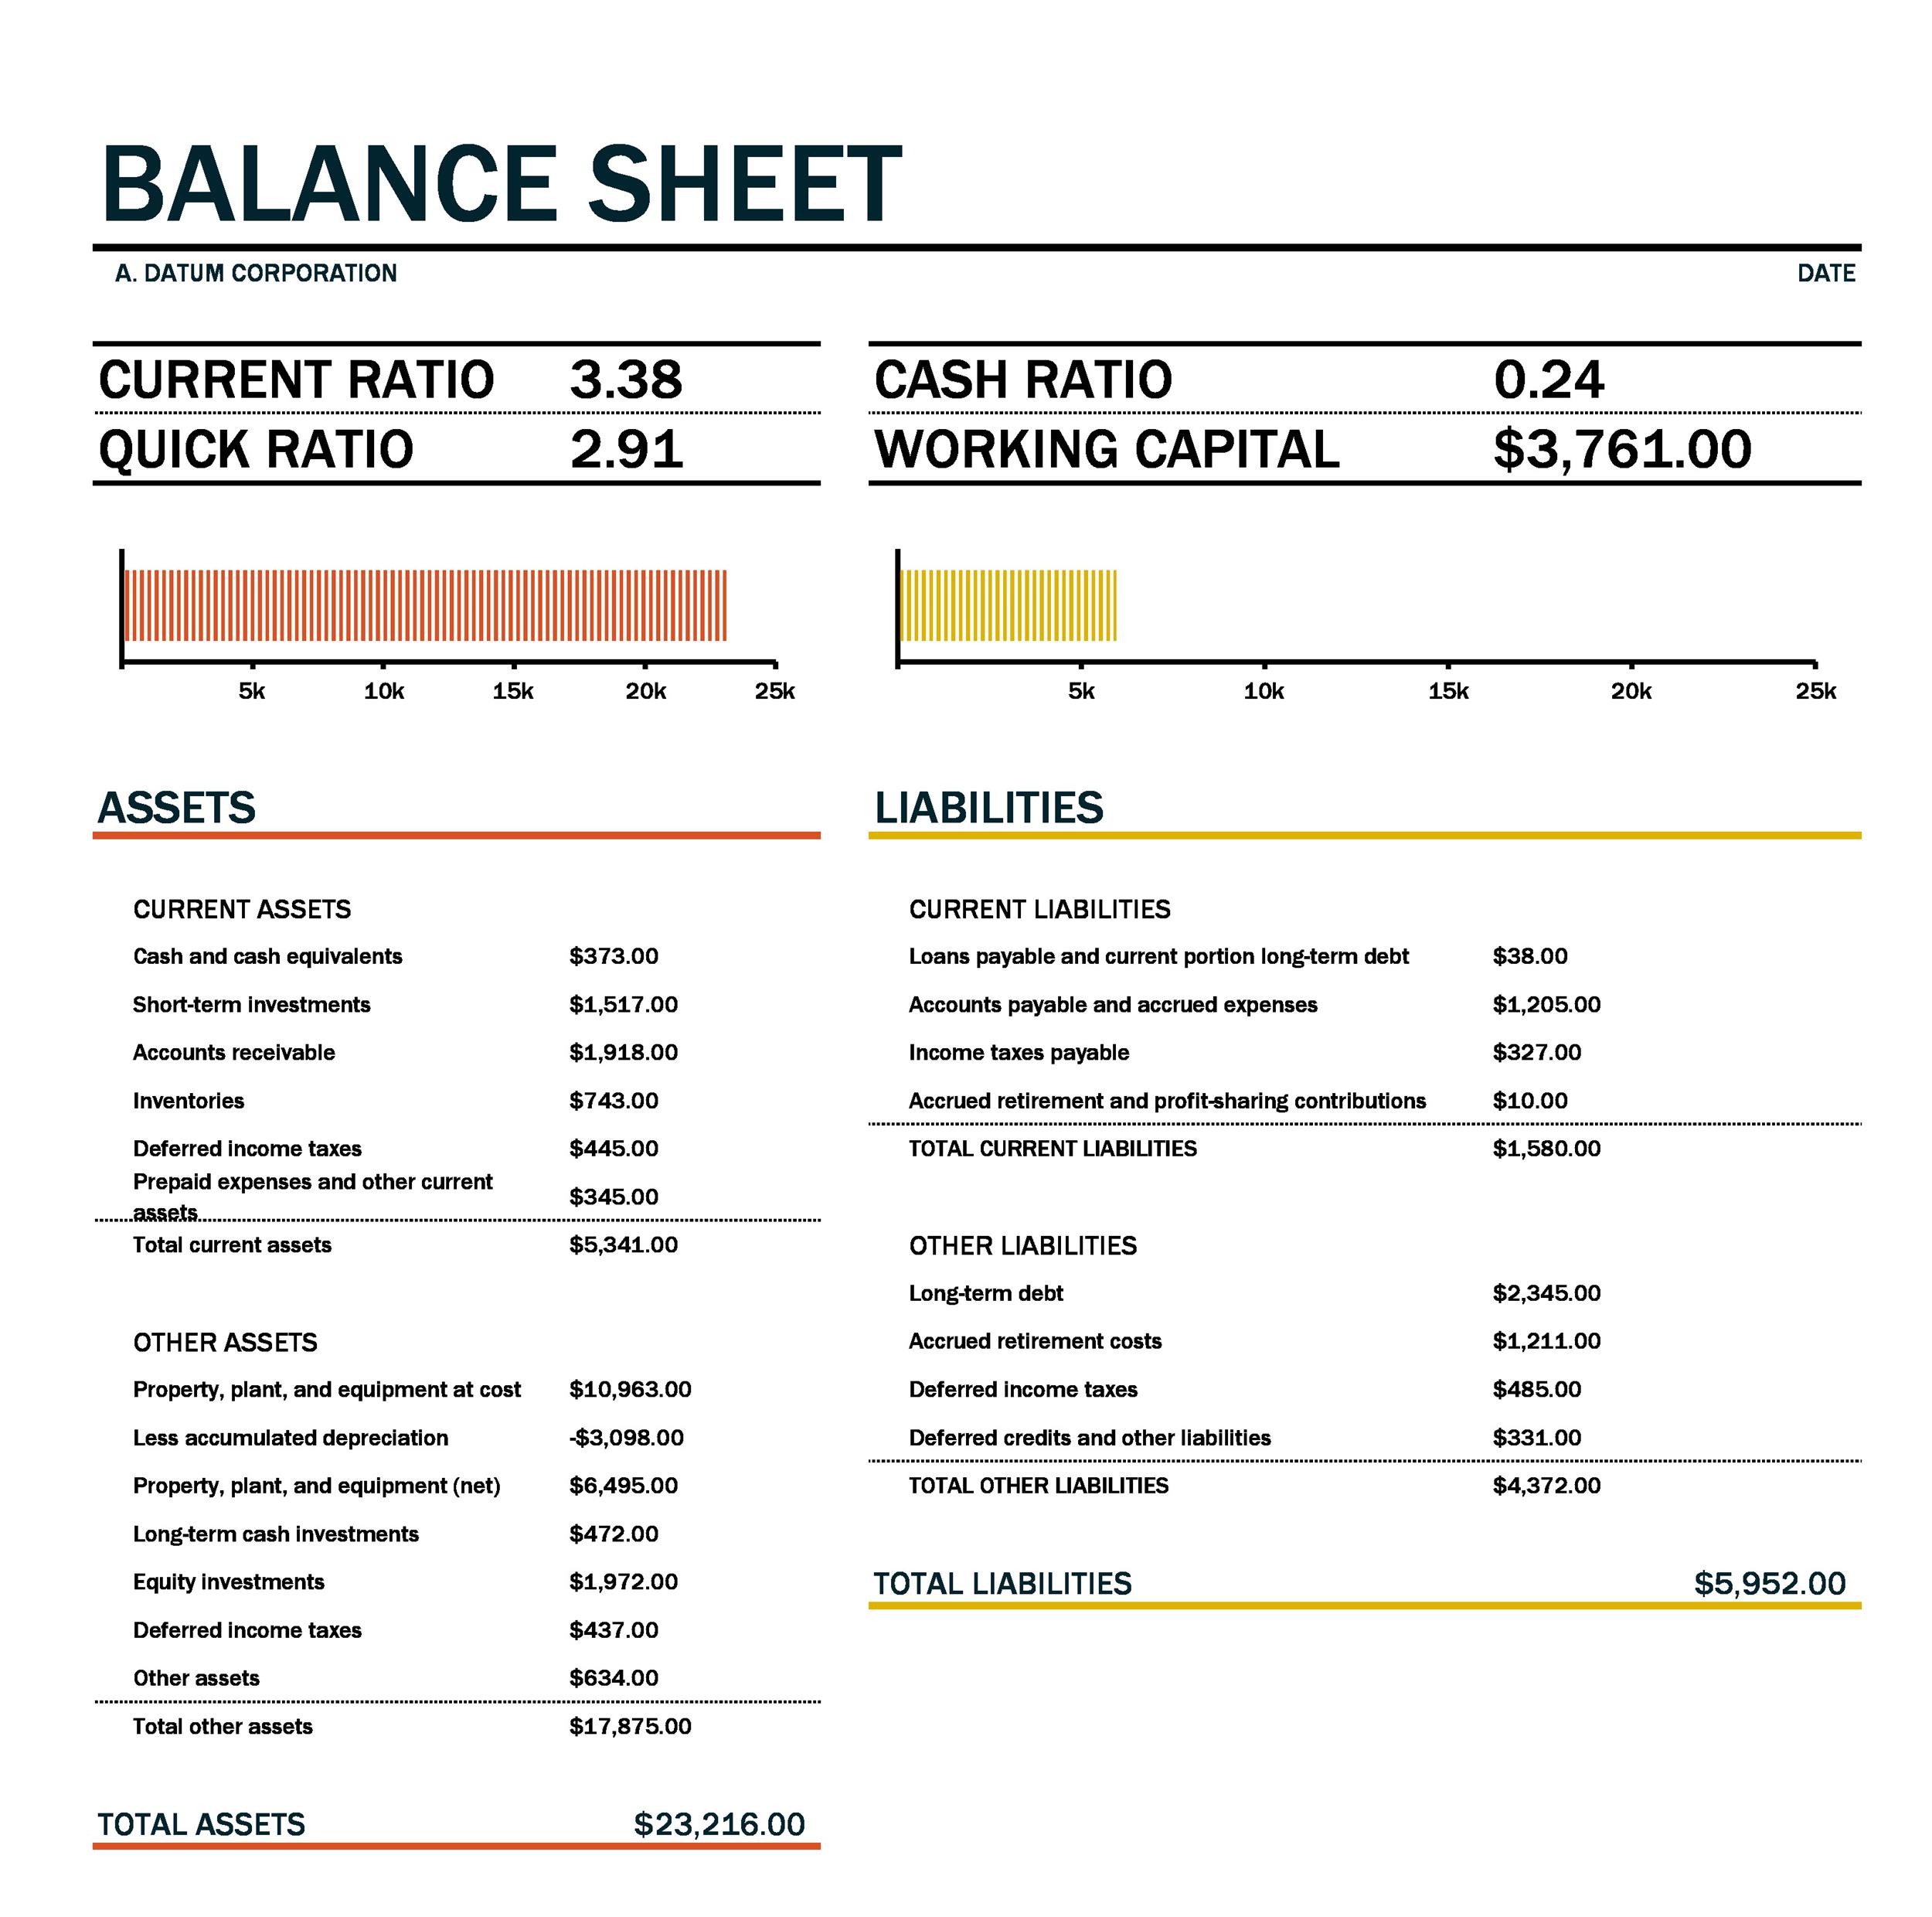 38 Free Balance Sheet Templates & Examples ᐅ TemplateLab